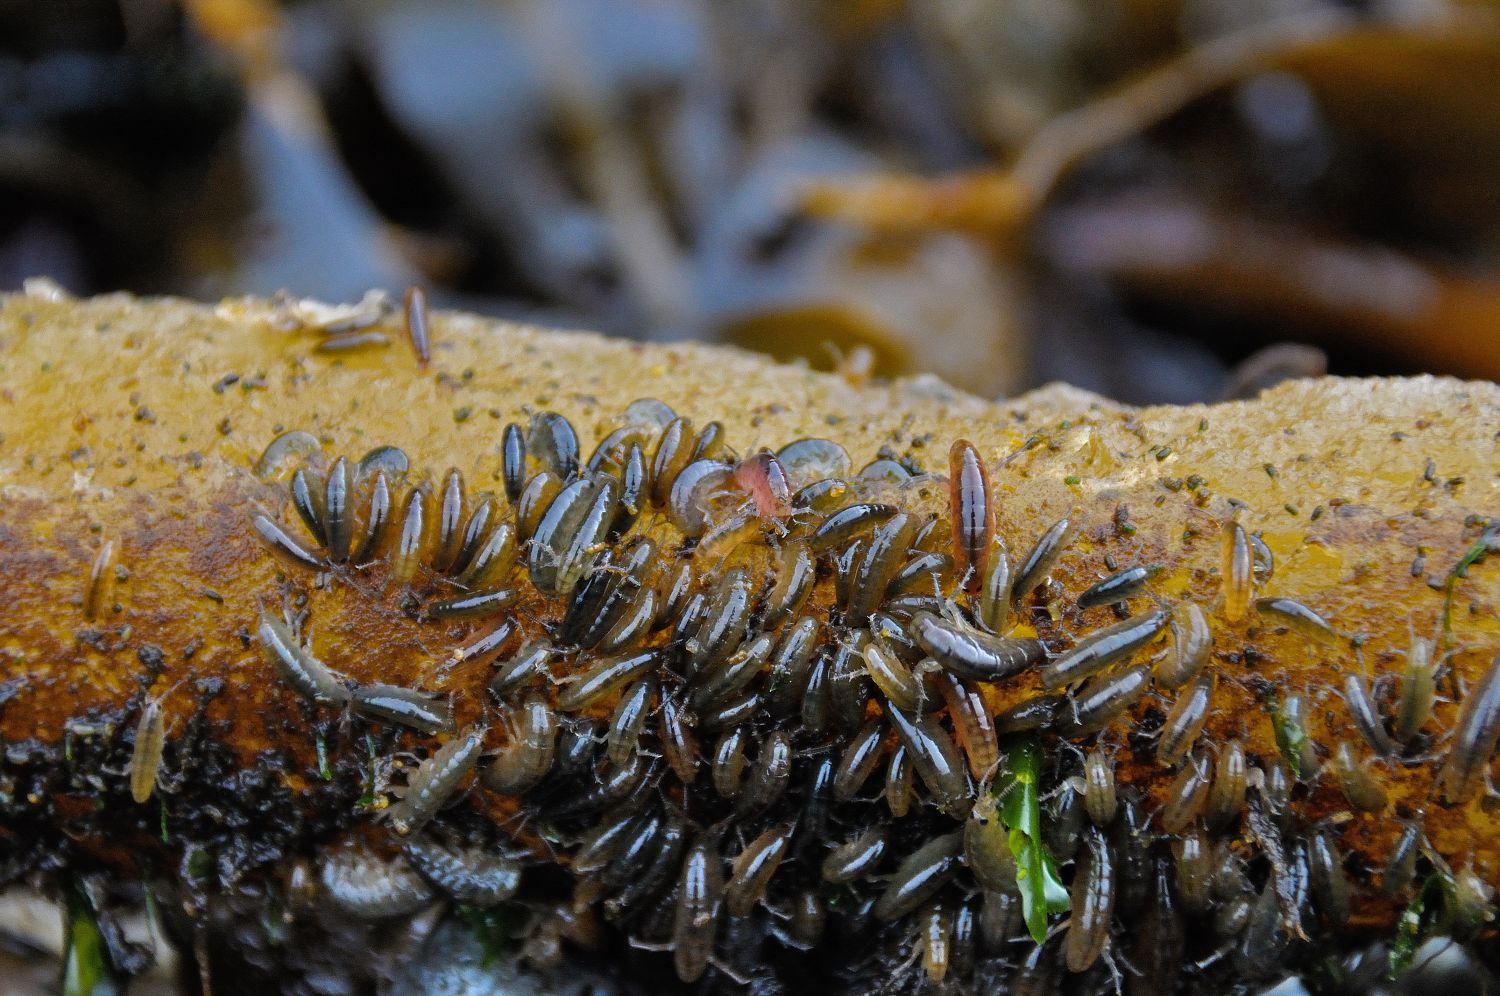 Shutterbugs Capturing the World Around Us: Sand Fleas (Ew gross!) Are There Sand Fleas In Galveston